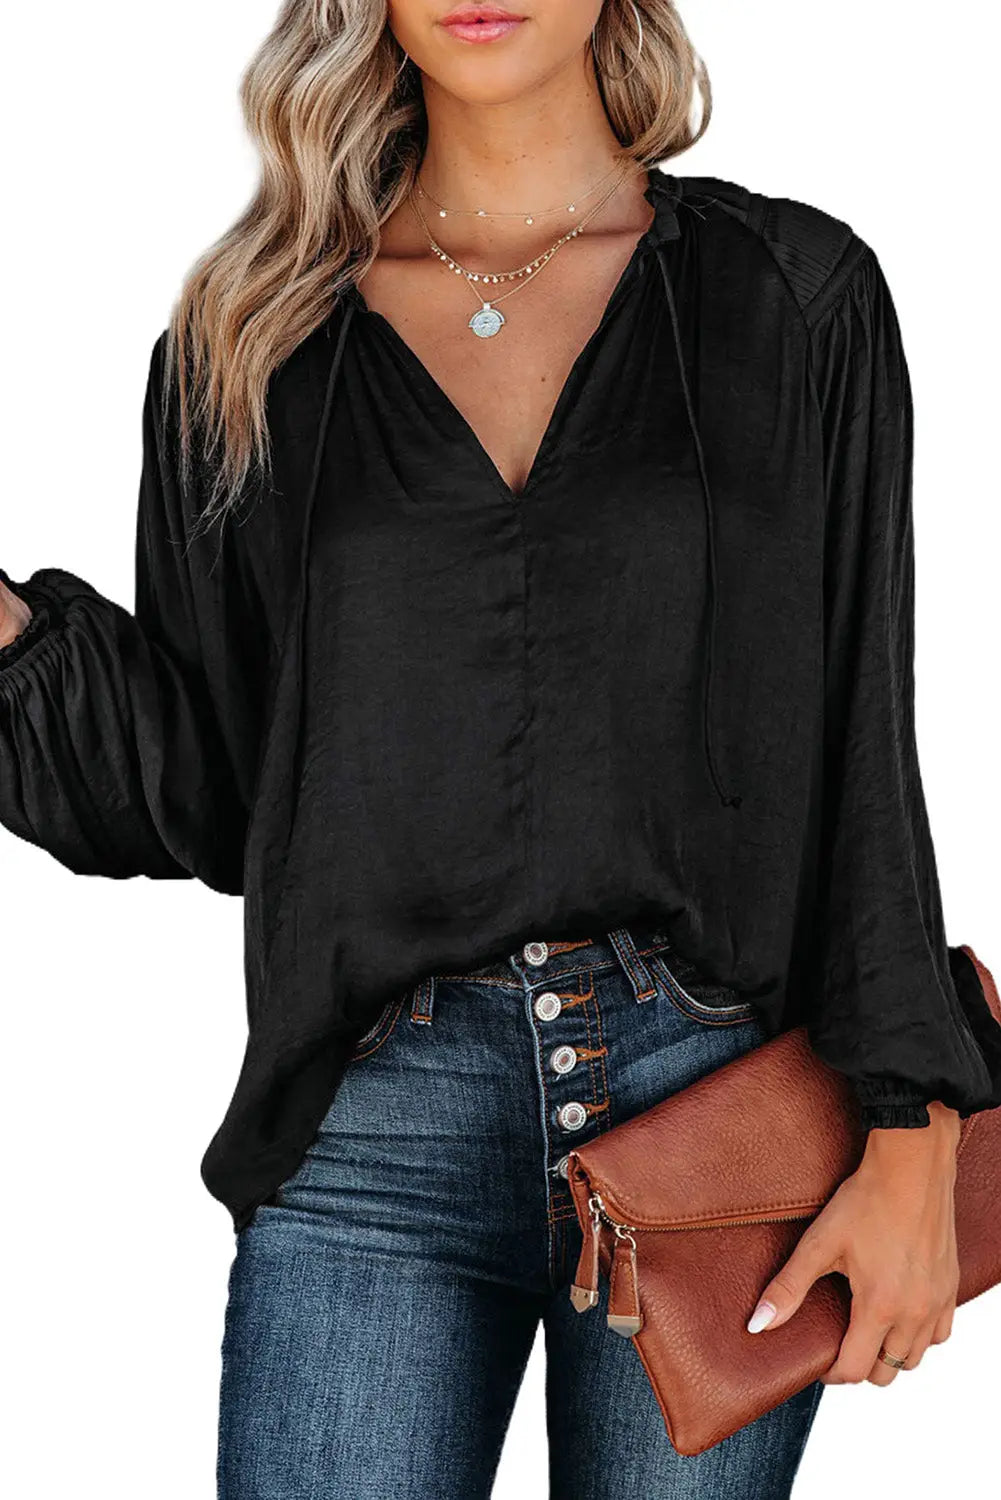 Khaki pleated balloon sleeve drawstring v-neck blouse - tops